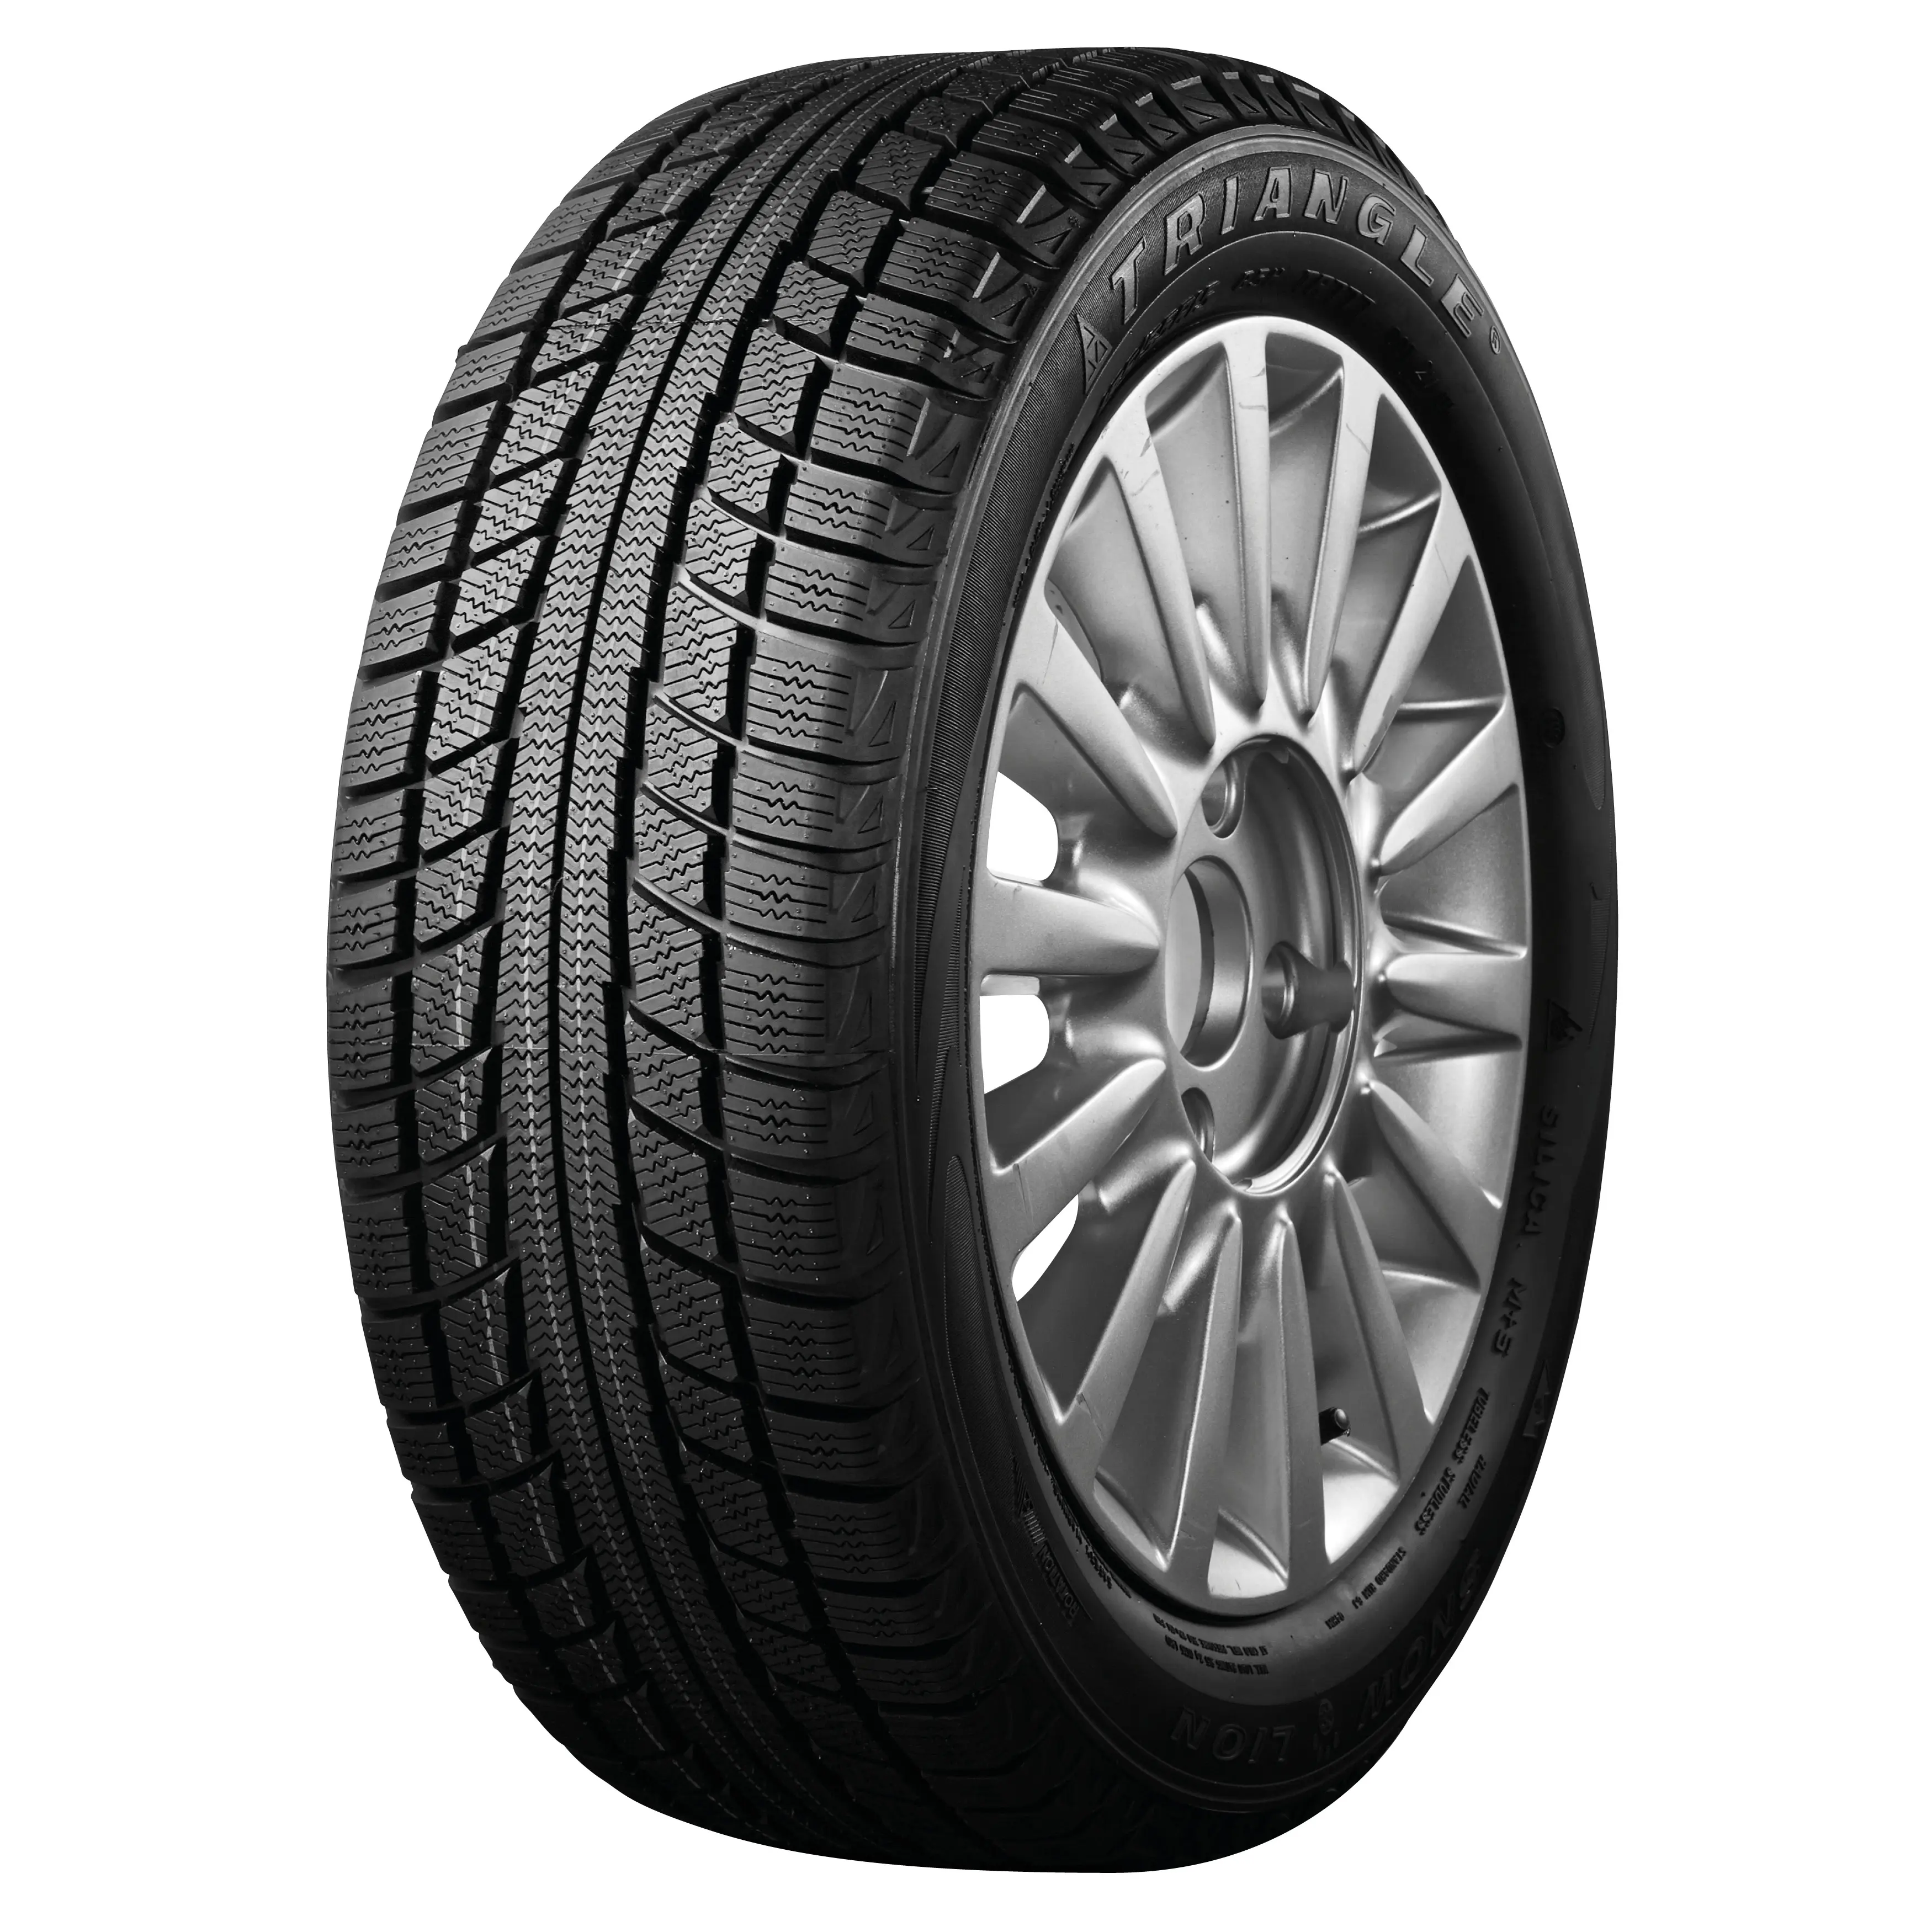 Neumáticos de ruedas de coche más vendidos 215 45 r17 285/60r18 255 55 18 245/30r20 neumáticos 245/45r19 235/55r19 245/55r19 neumático de nieve de invierno